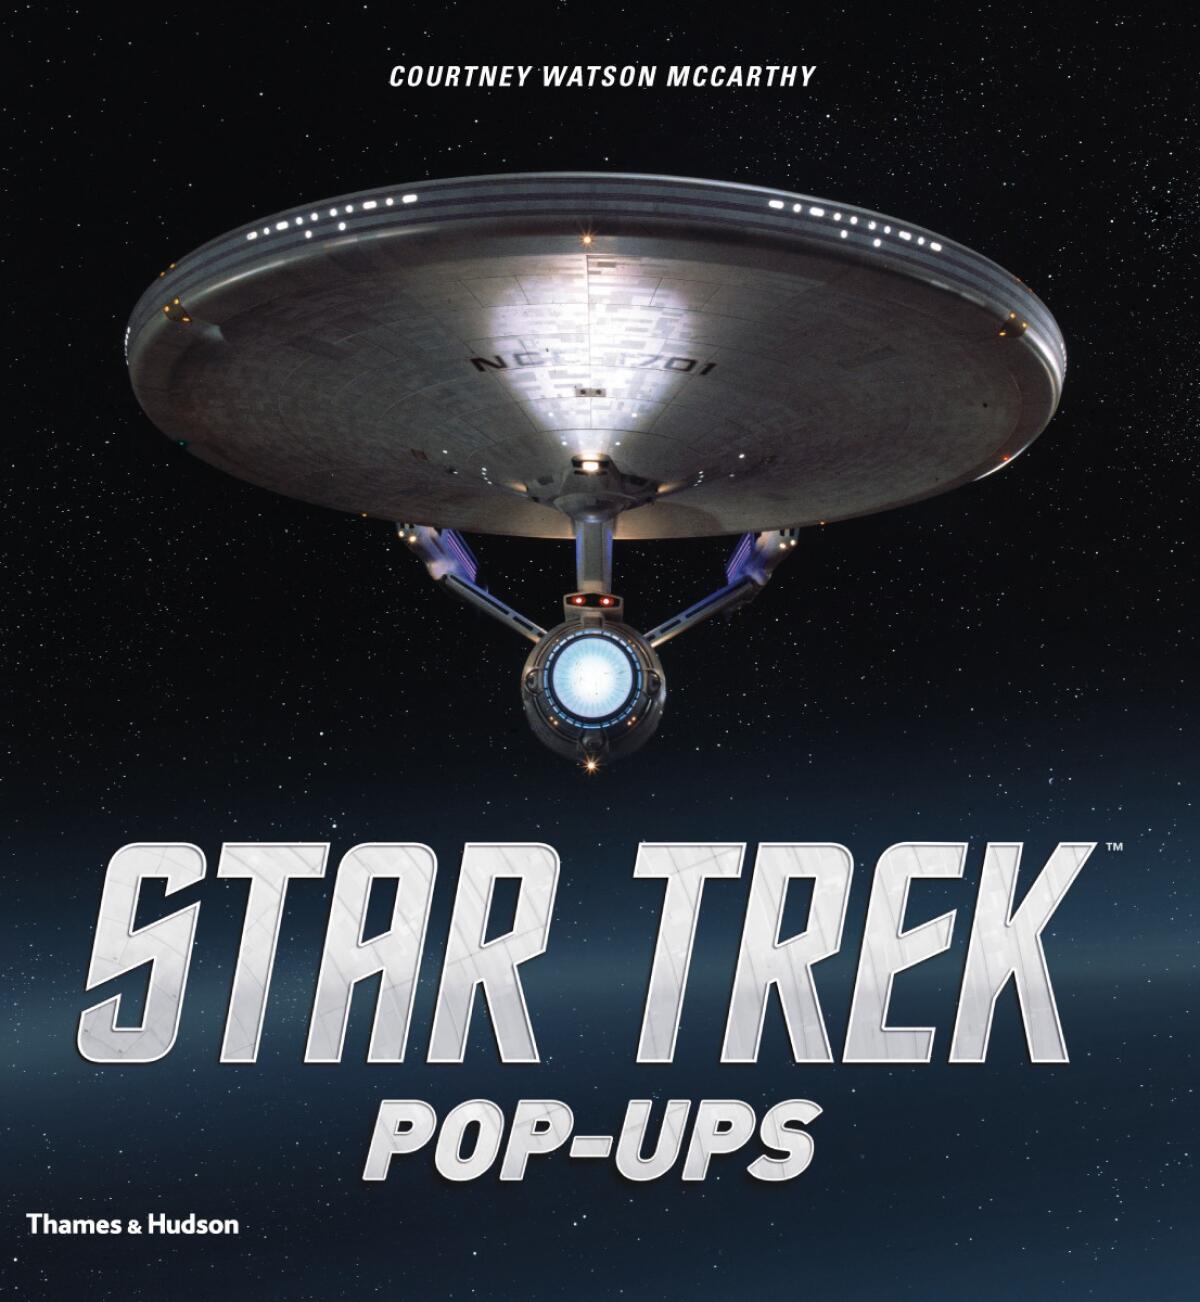 "Star Trek Pop-Ups"